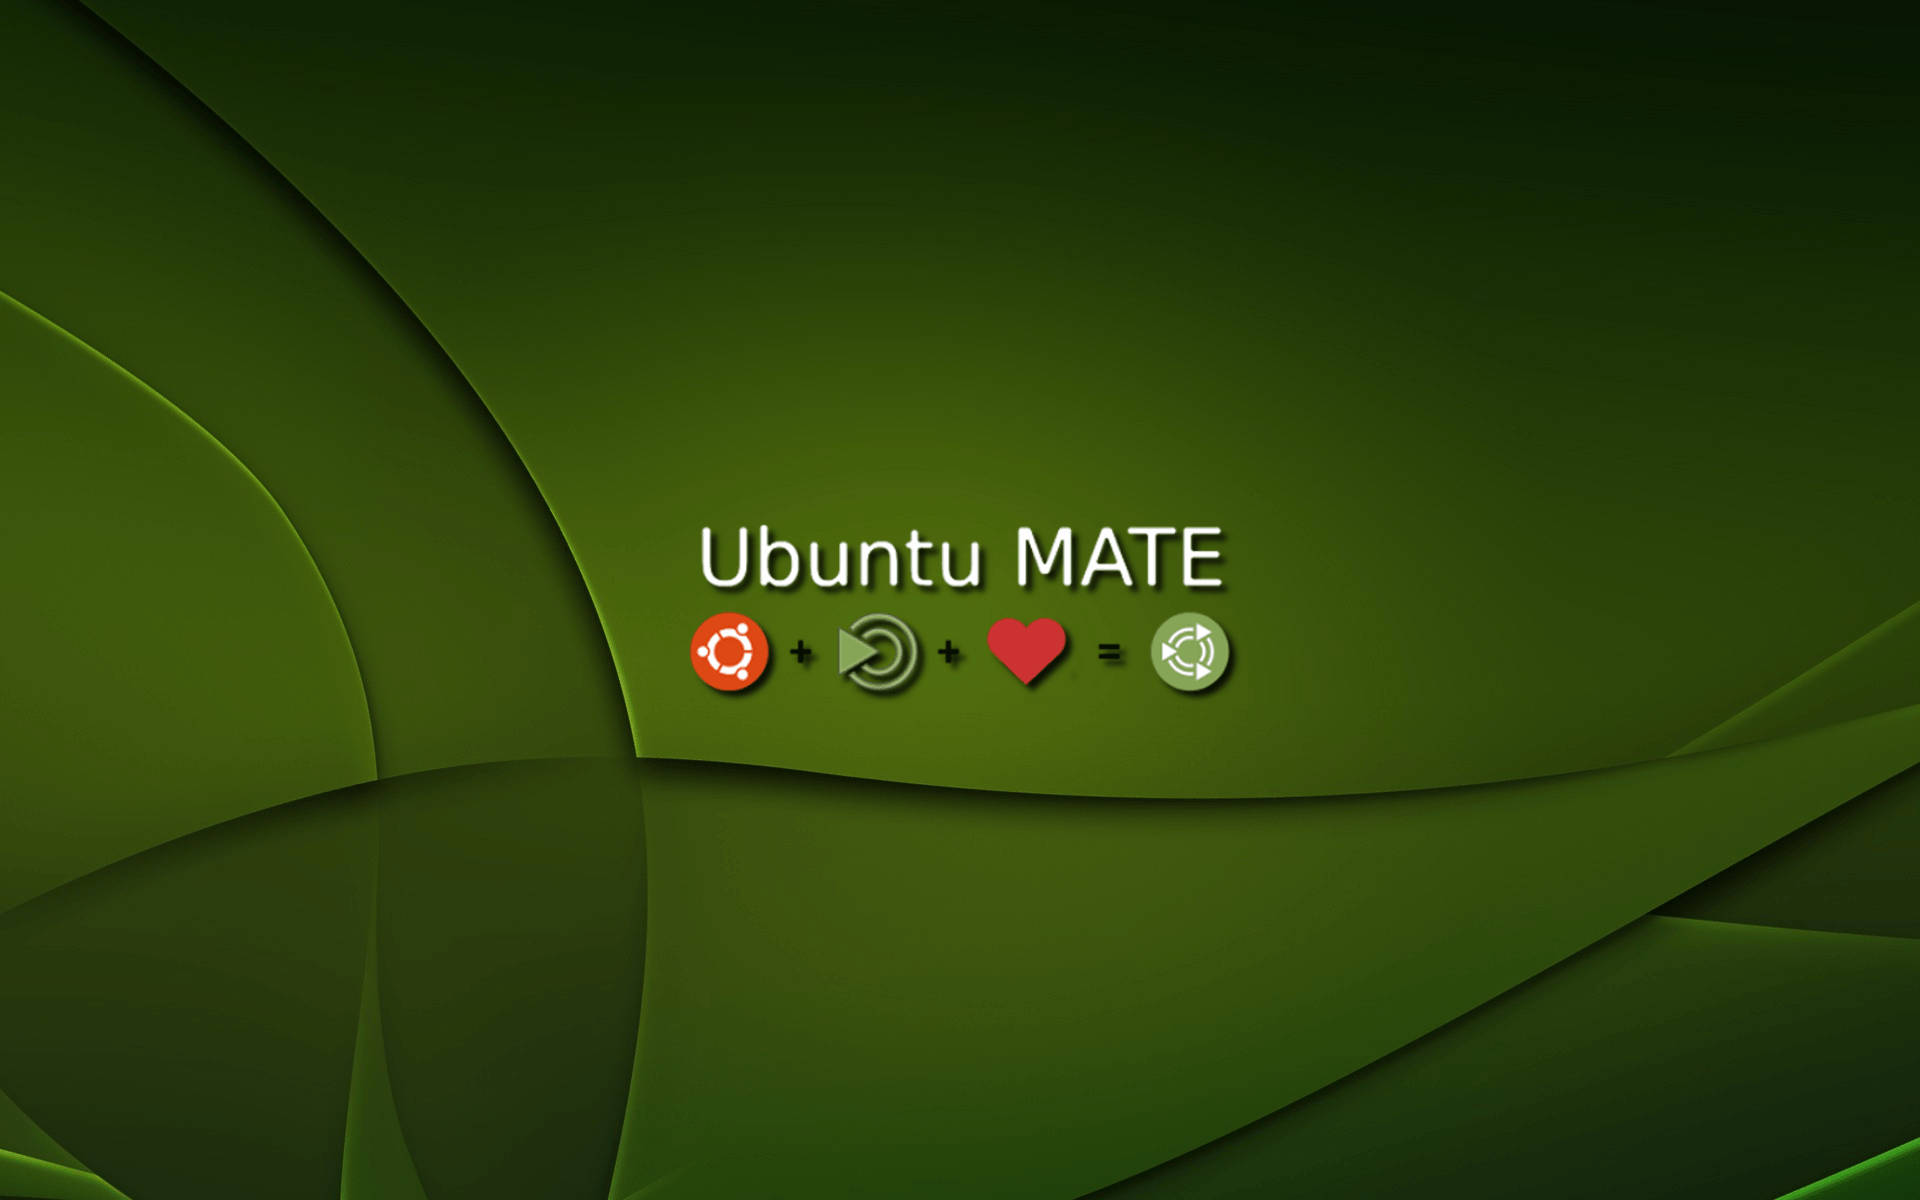 Ubuntu Mate Hd